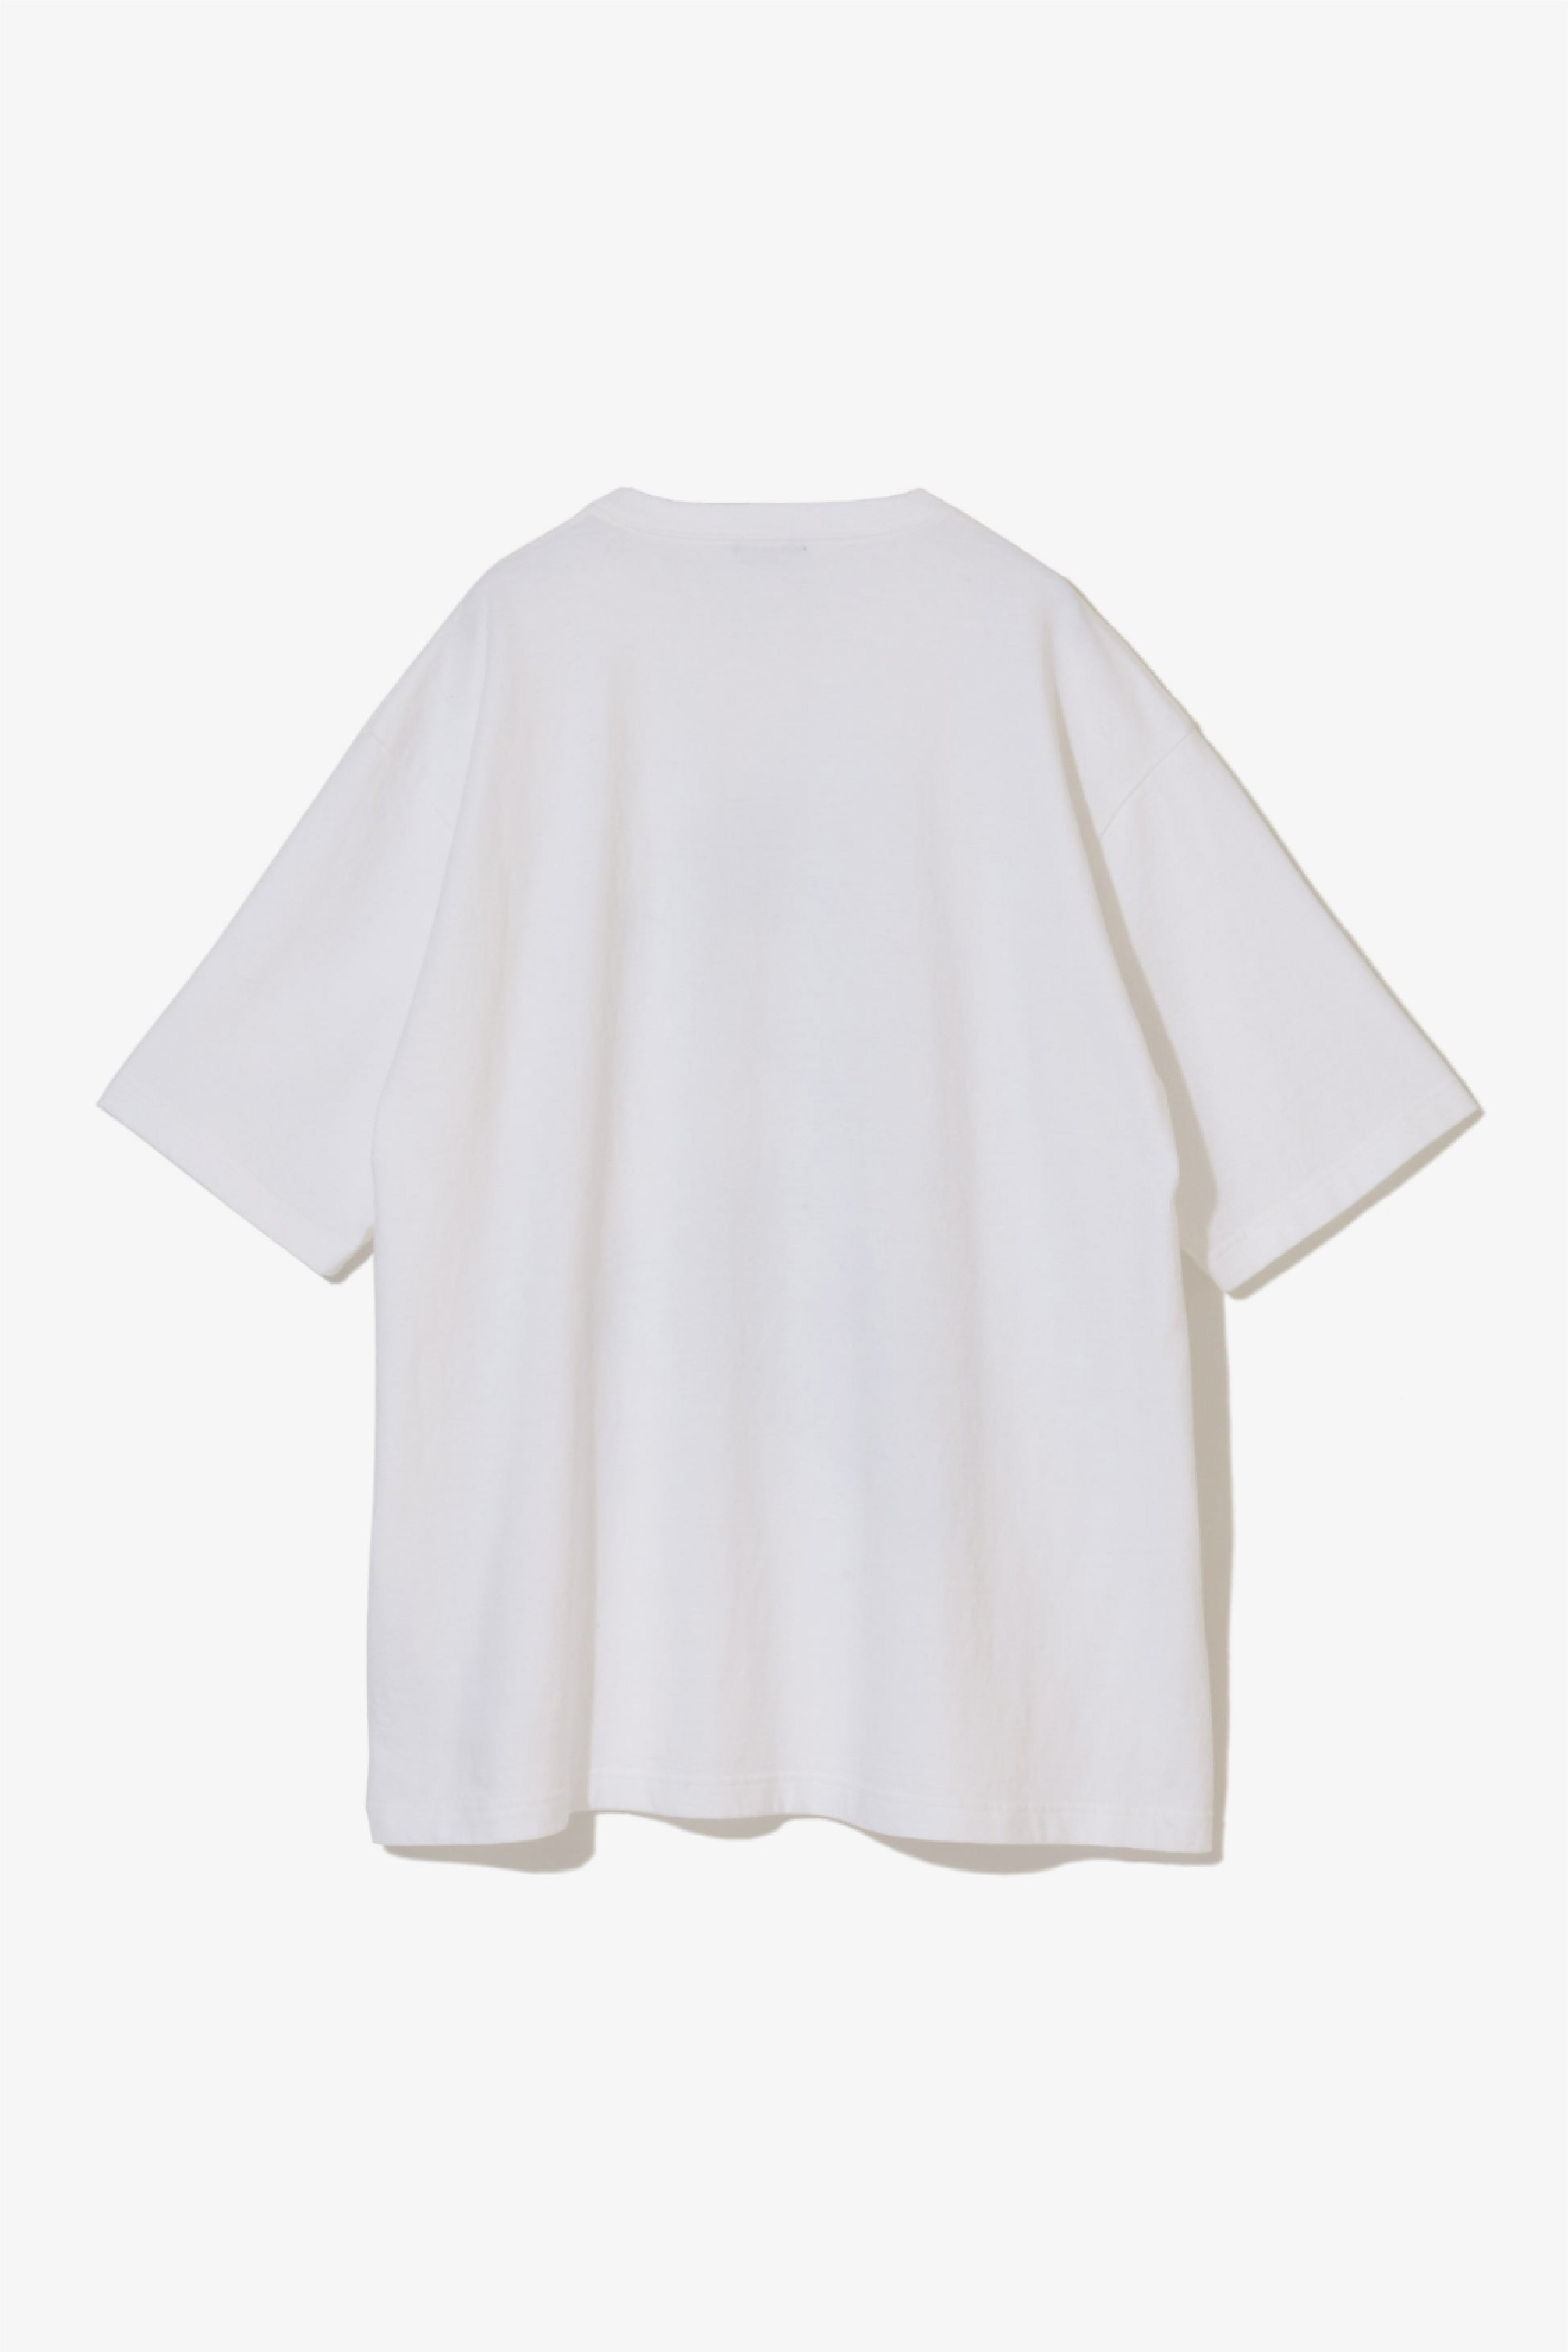 Selectshop FRAME - UNDERCOVERISM Neo Boy T-Shirt T-Shirt Dubai